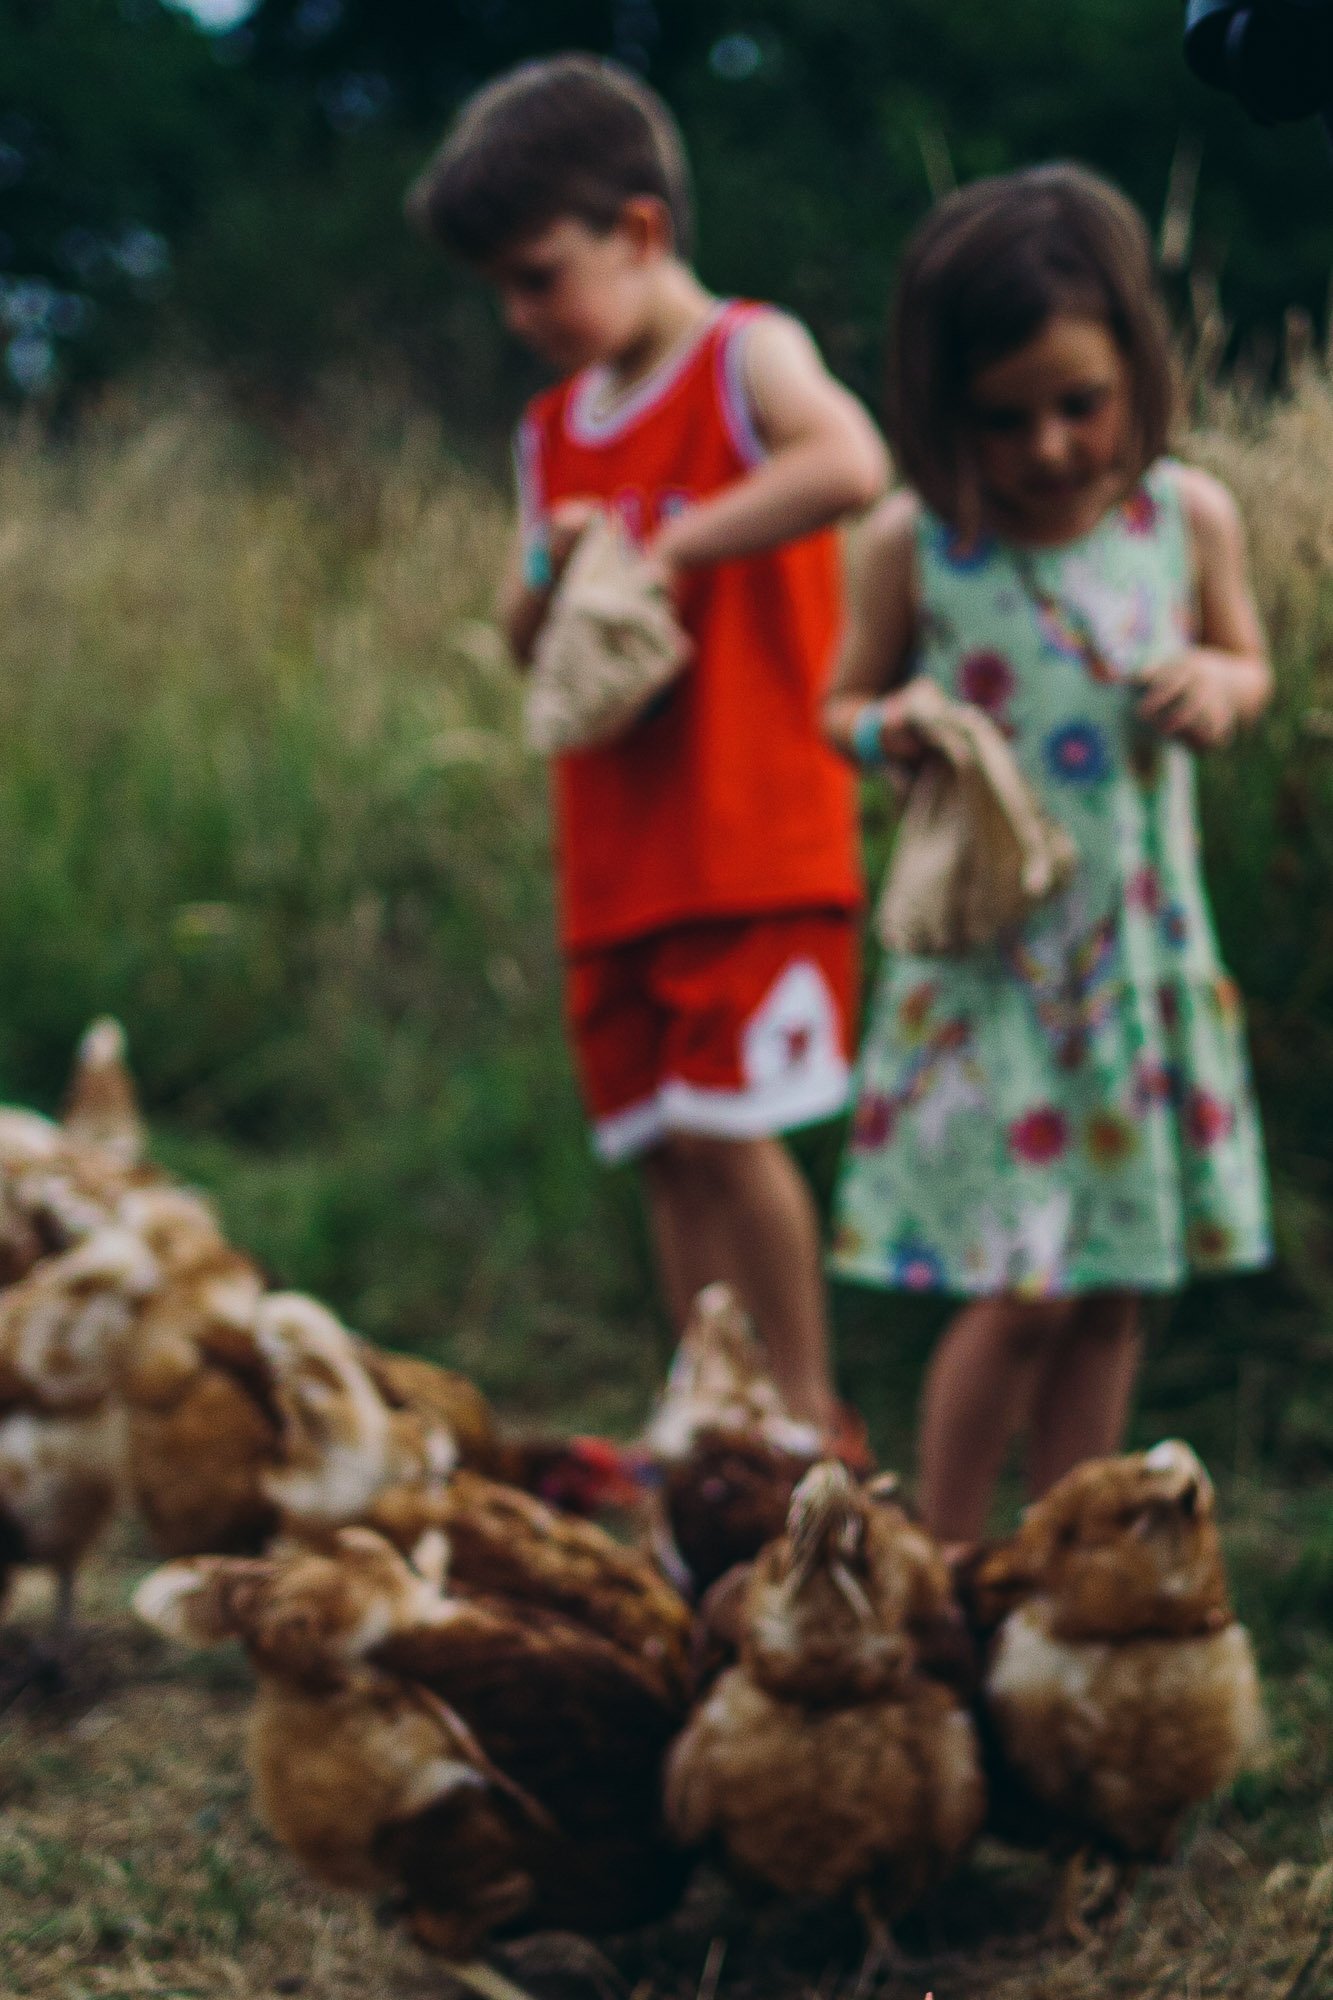 boy-girl-feeding-ckickens-campsite-macs-farm-unposed-natural-fun-family-photos-burgess-hill-sussex.jpg